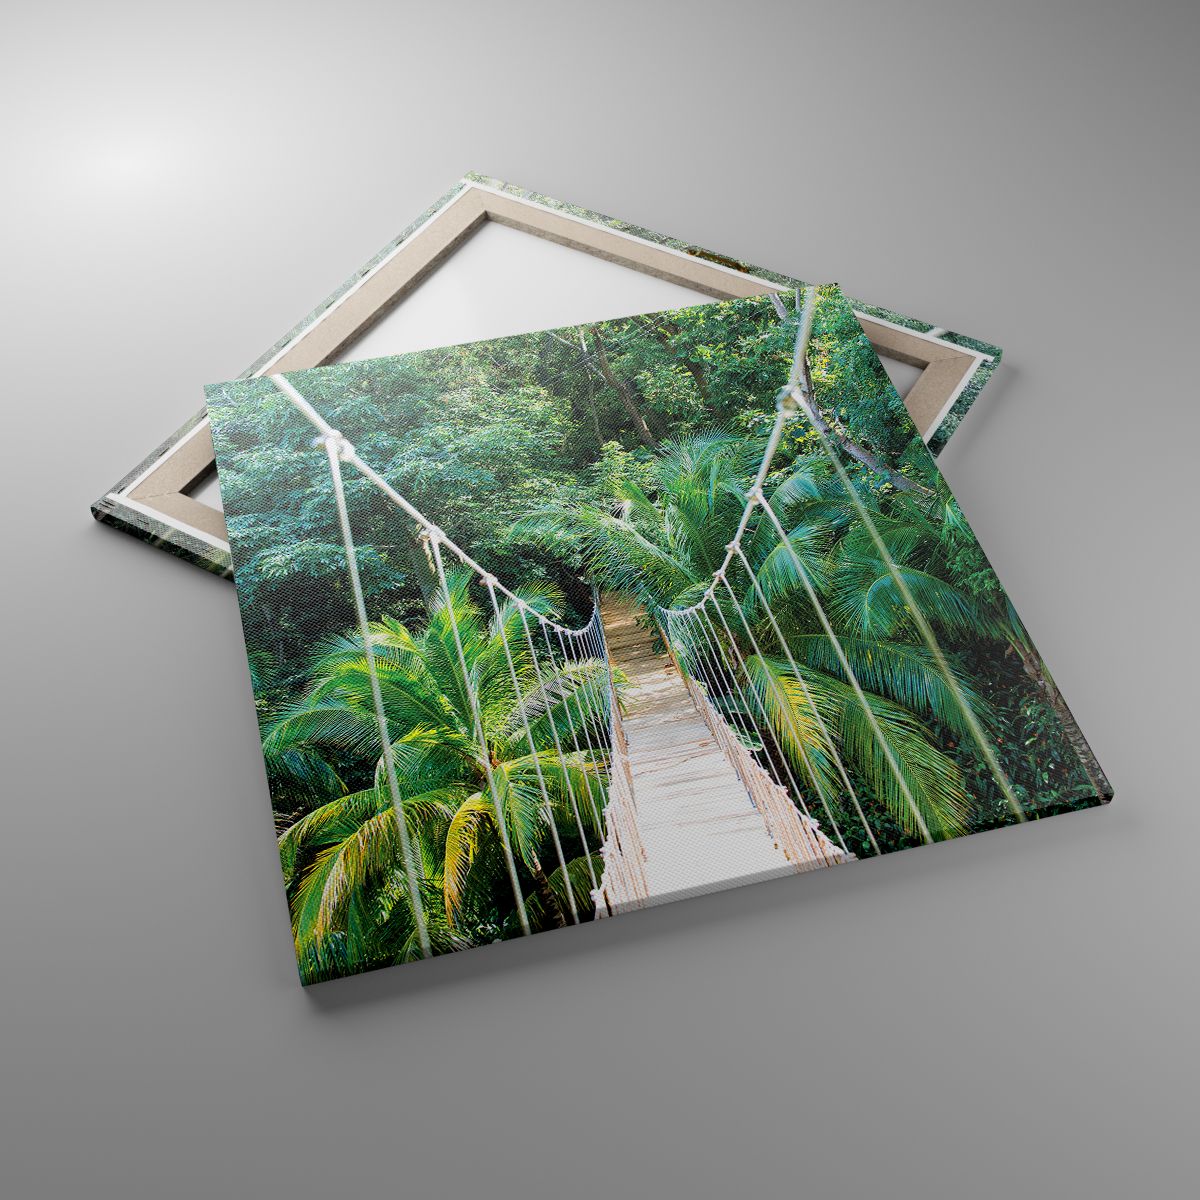 Impression Paysage, Impression Jungle, Impression Honduras, Impression Pont Suspendu, Impression La Nature